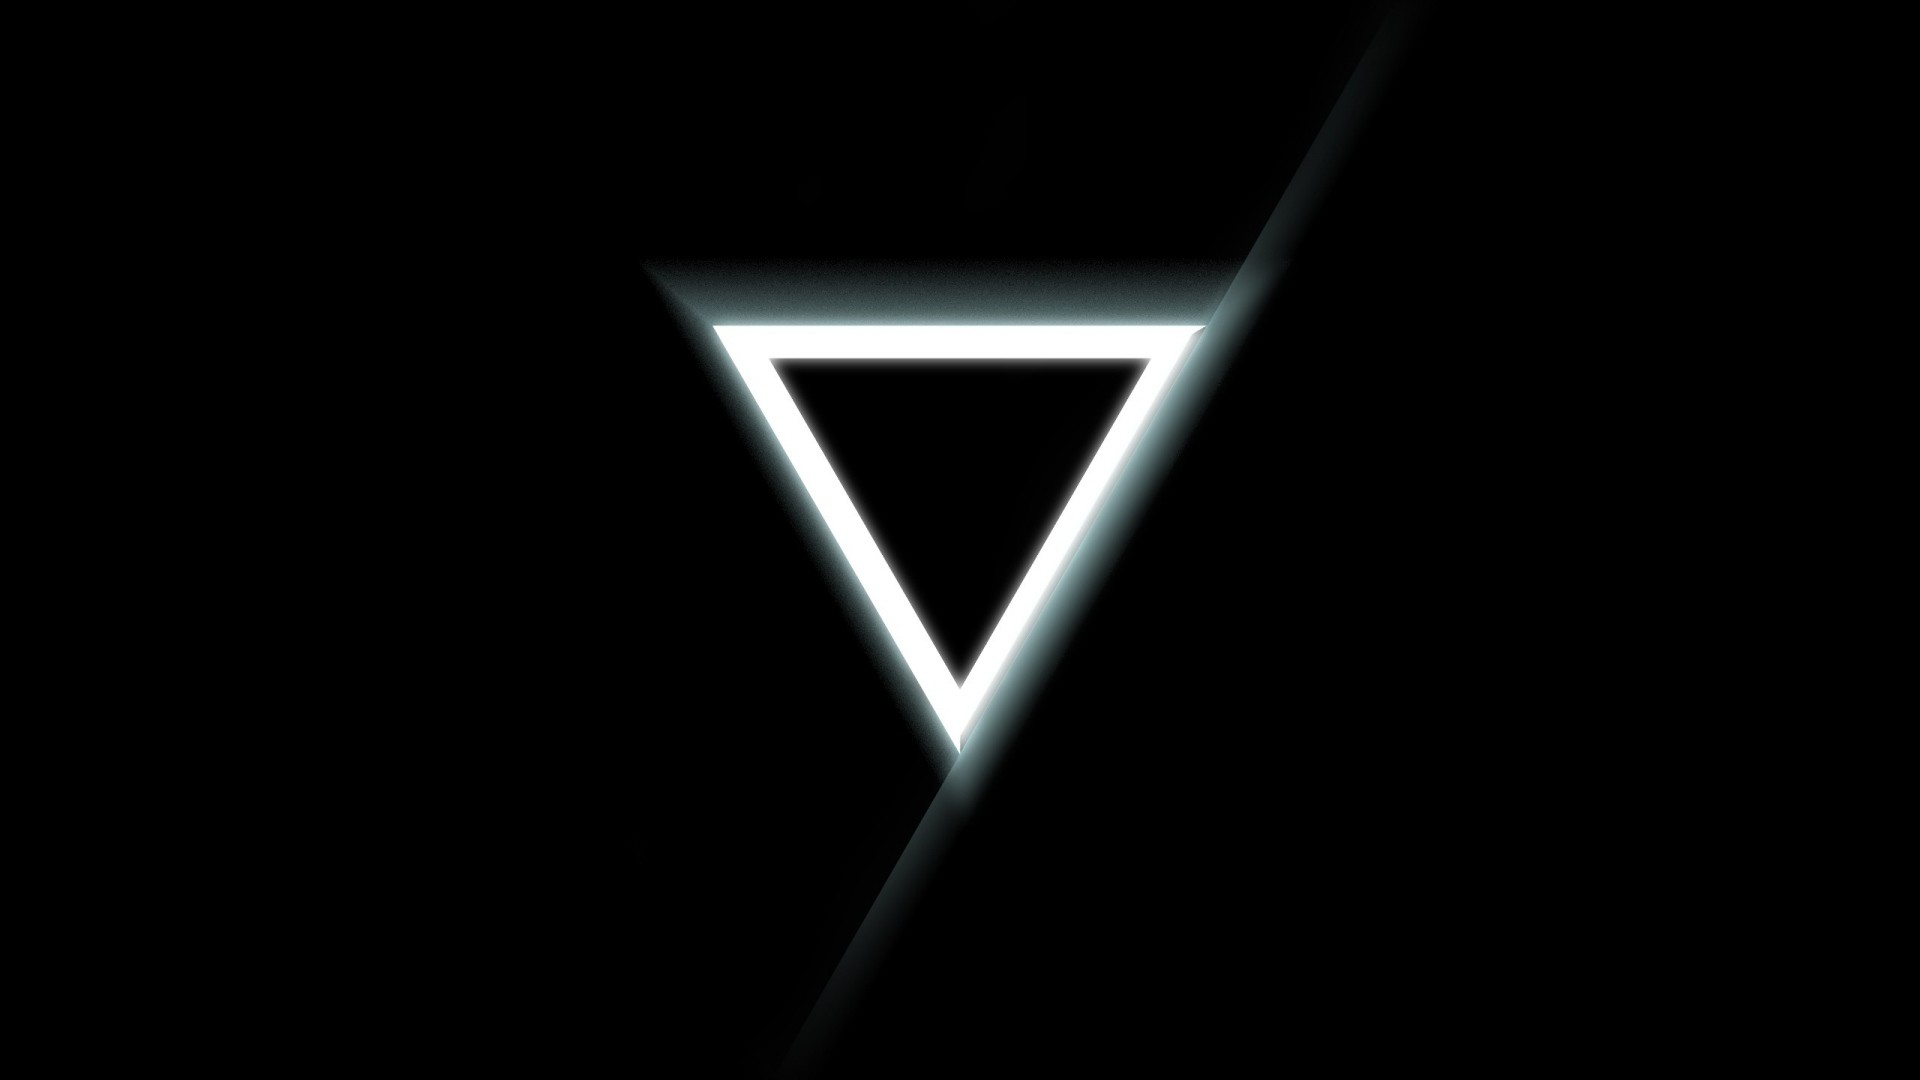 Triangle inverted black white